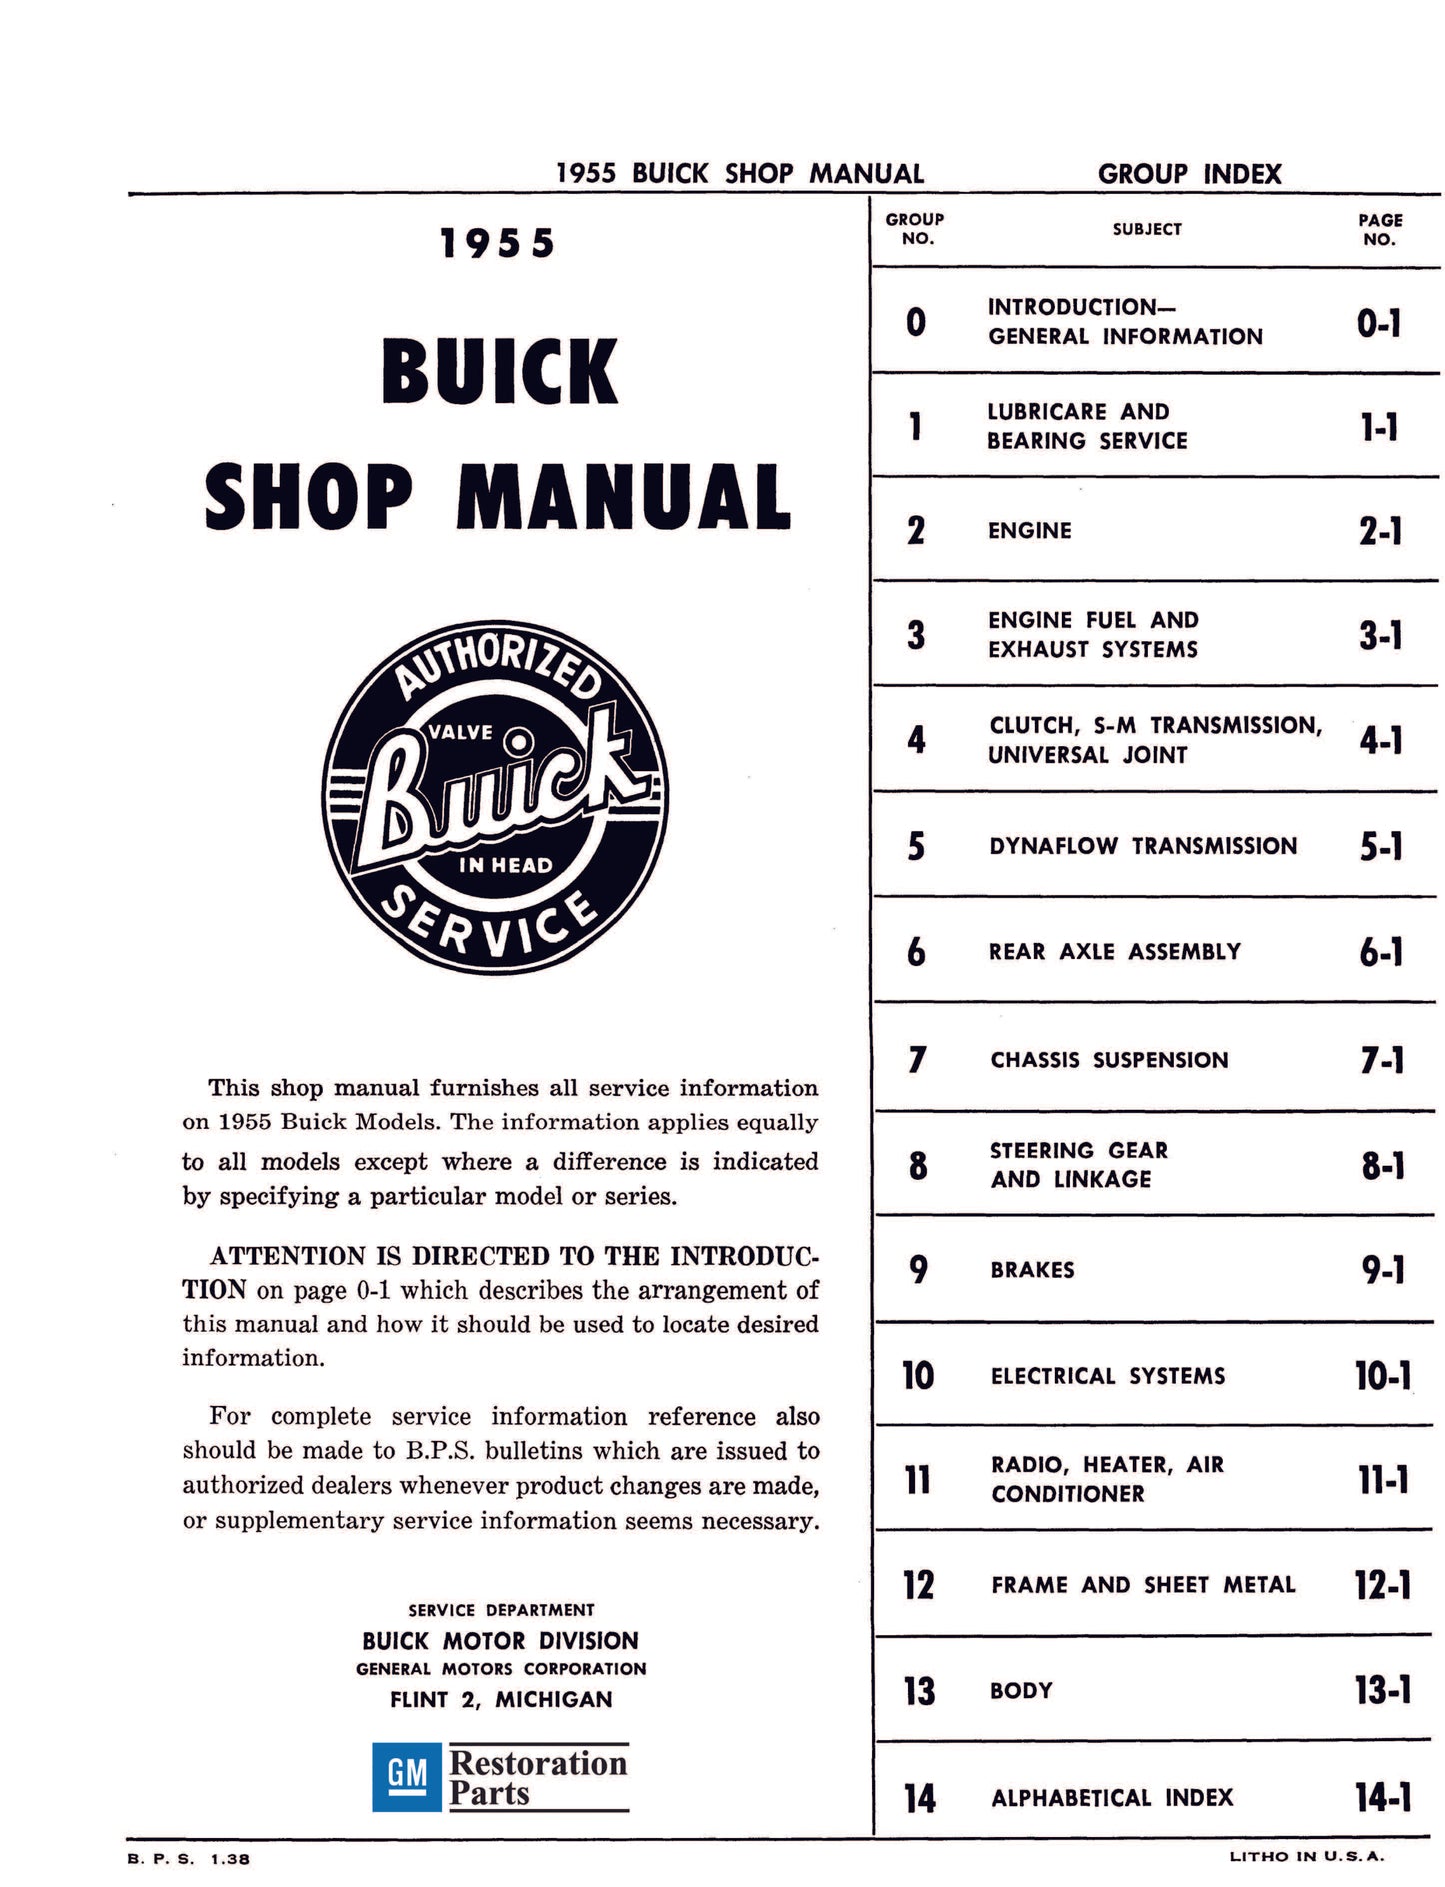 1955 Buick Cd-rom Repair Manual - All Models